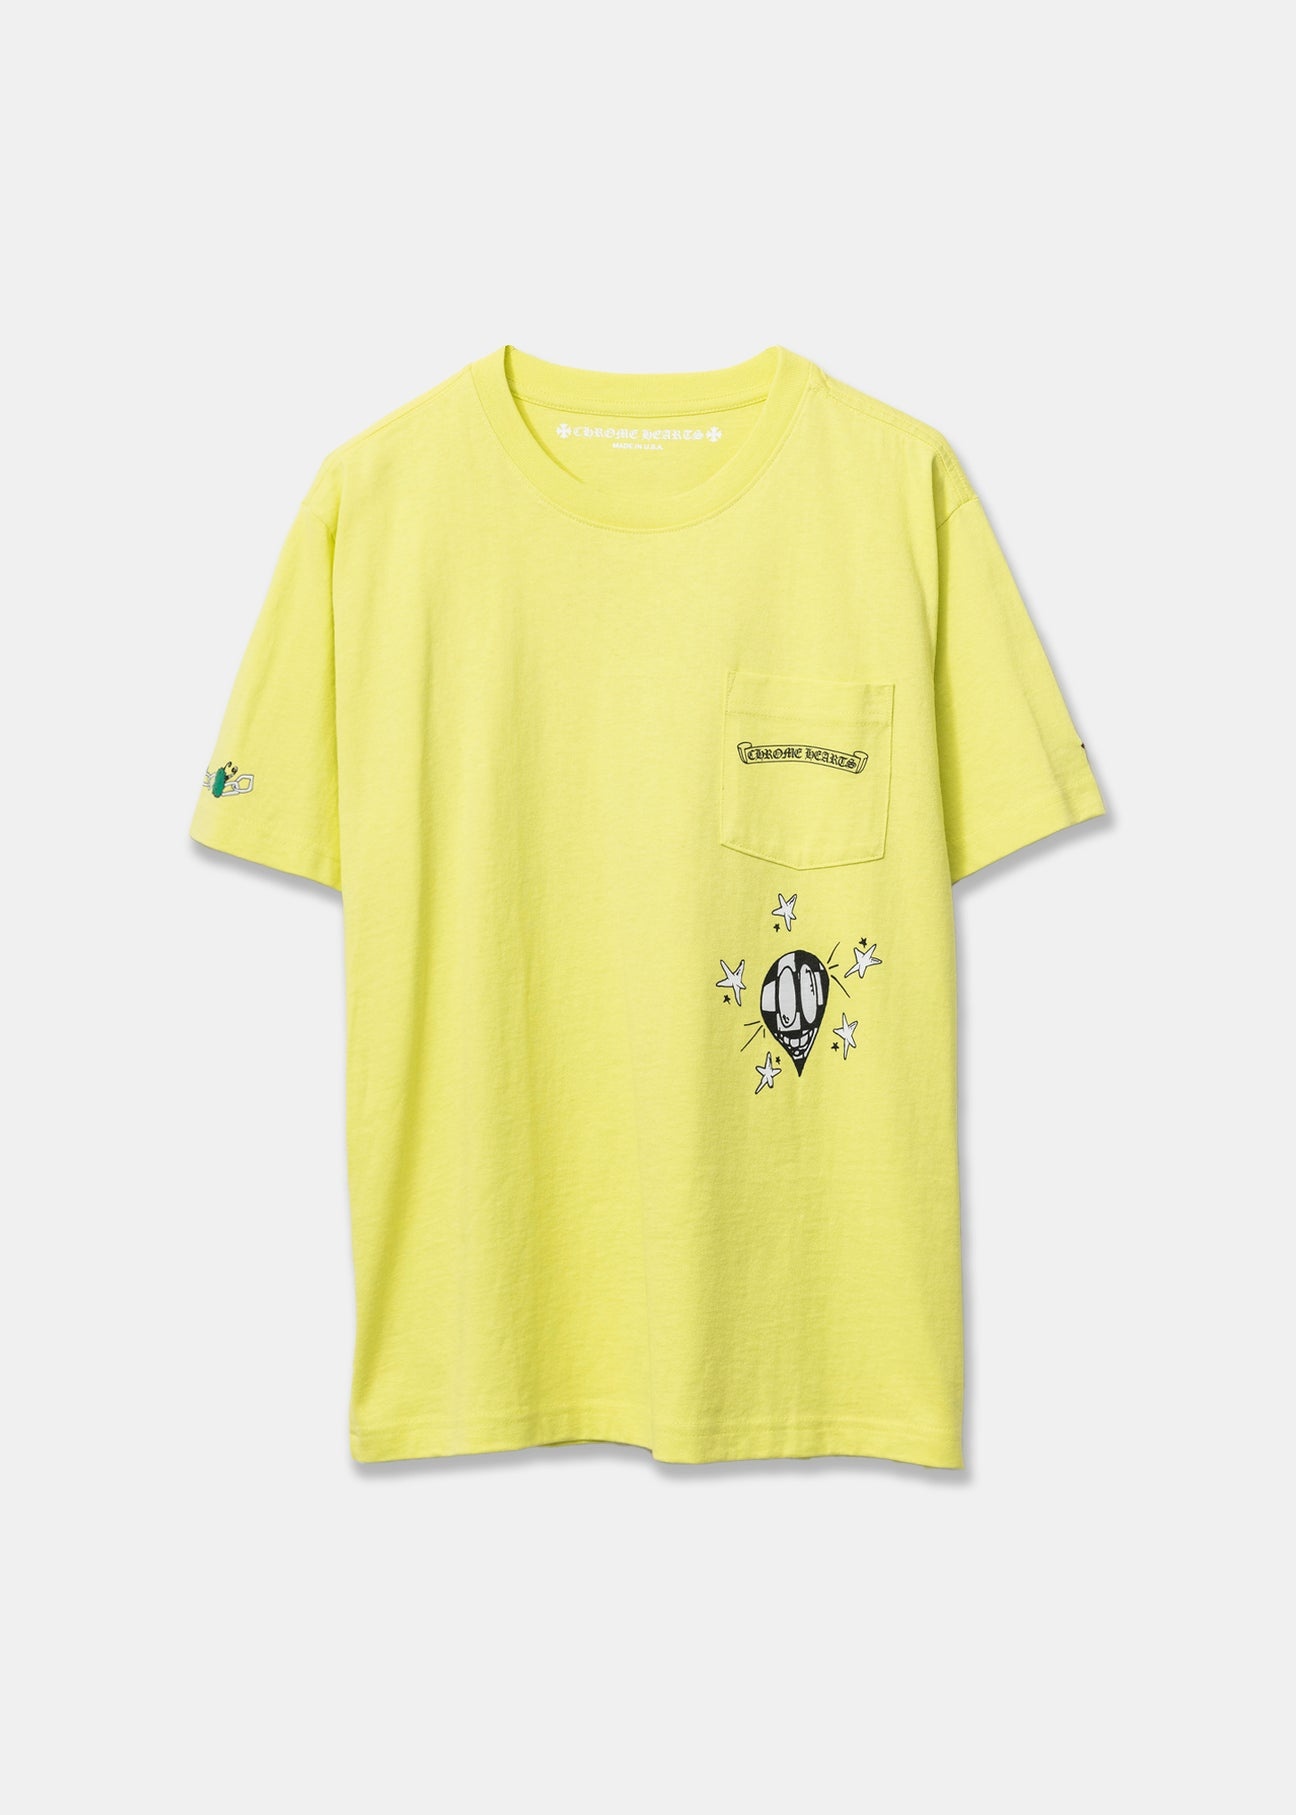 Neon Yellow Chrome Hearts x Matty Boy Chain Face T-Shirt - 1